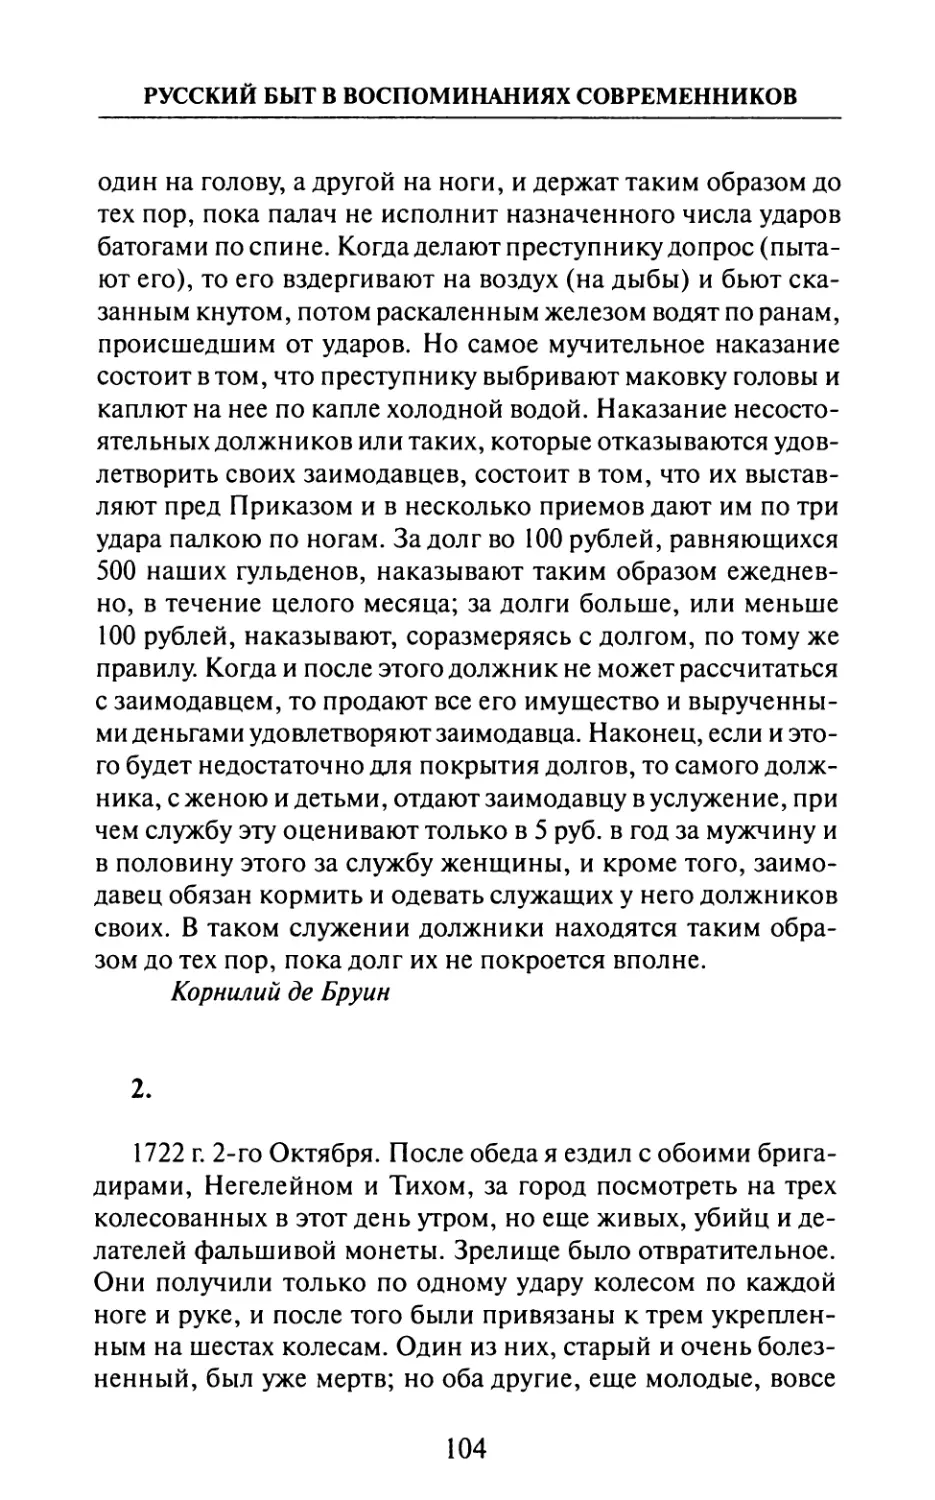 2.  Ф.  Берхголъц.  «Дневник  Камер-юнкера с  1721-1725  гг»